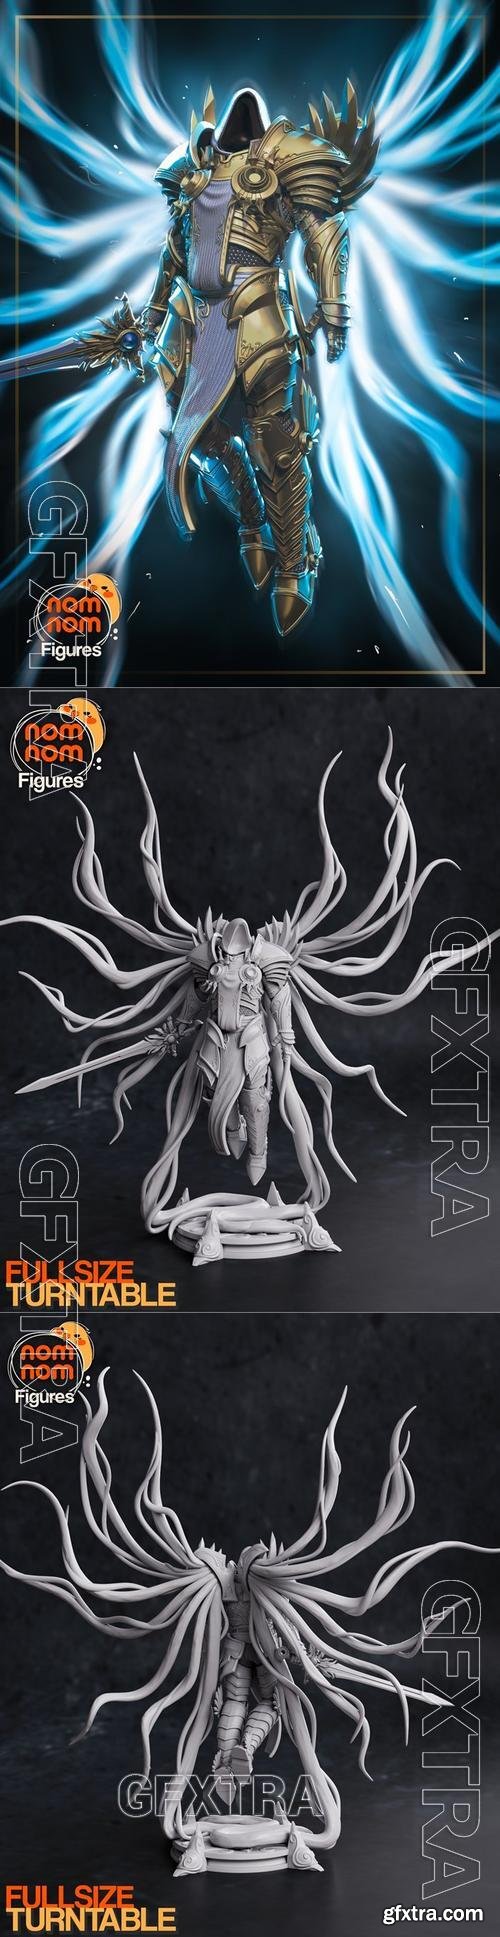 Nomnom Figures - Tyrael from Diablo &ndash; 3D Print Model